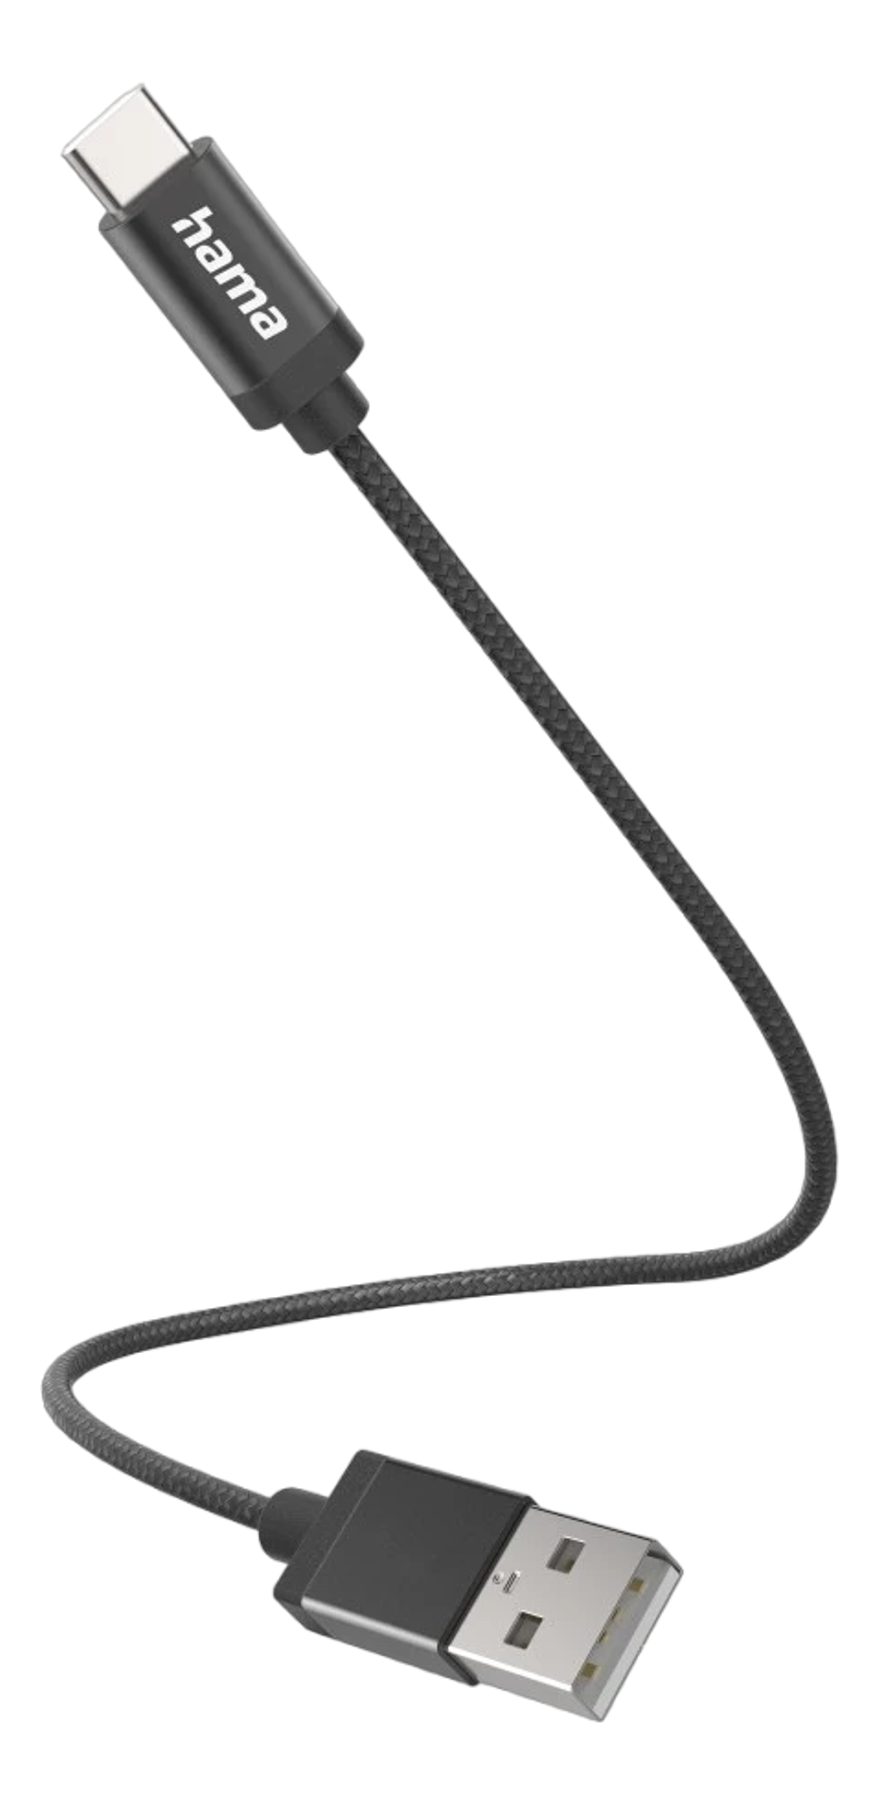 HAMA 00201600 - Câble USB (Noir)